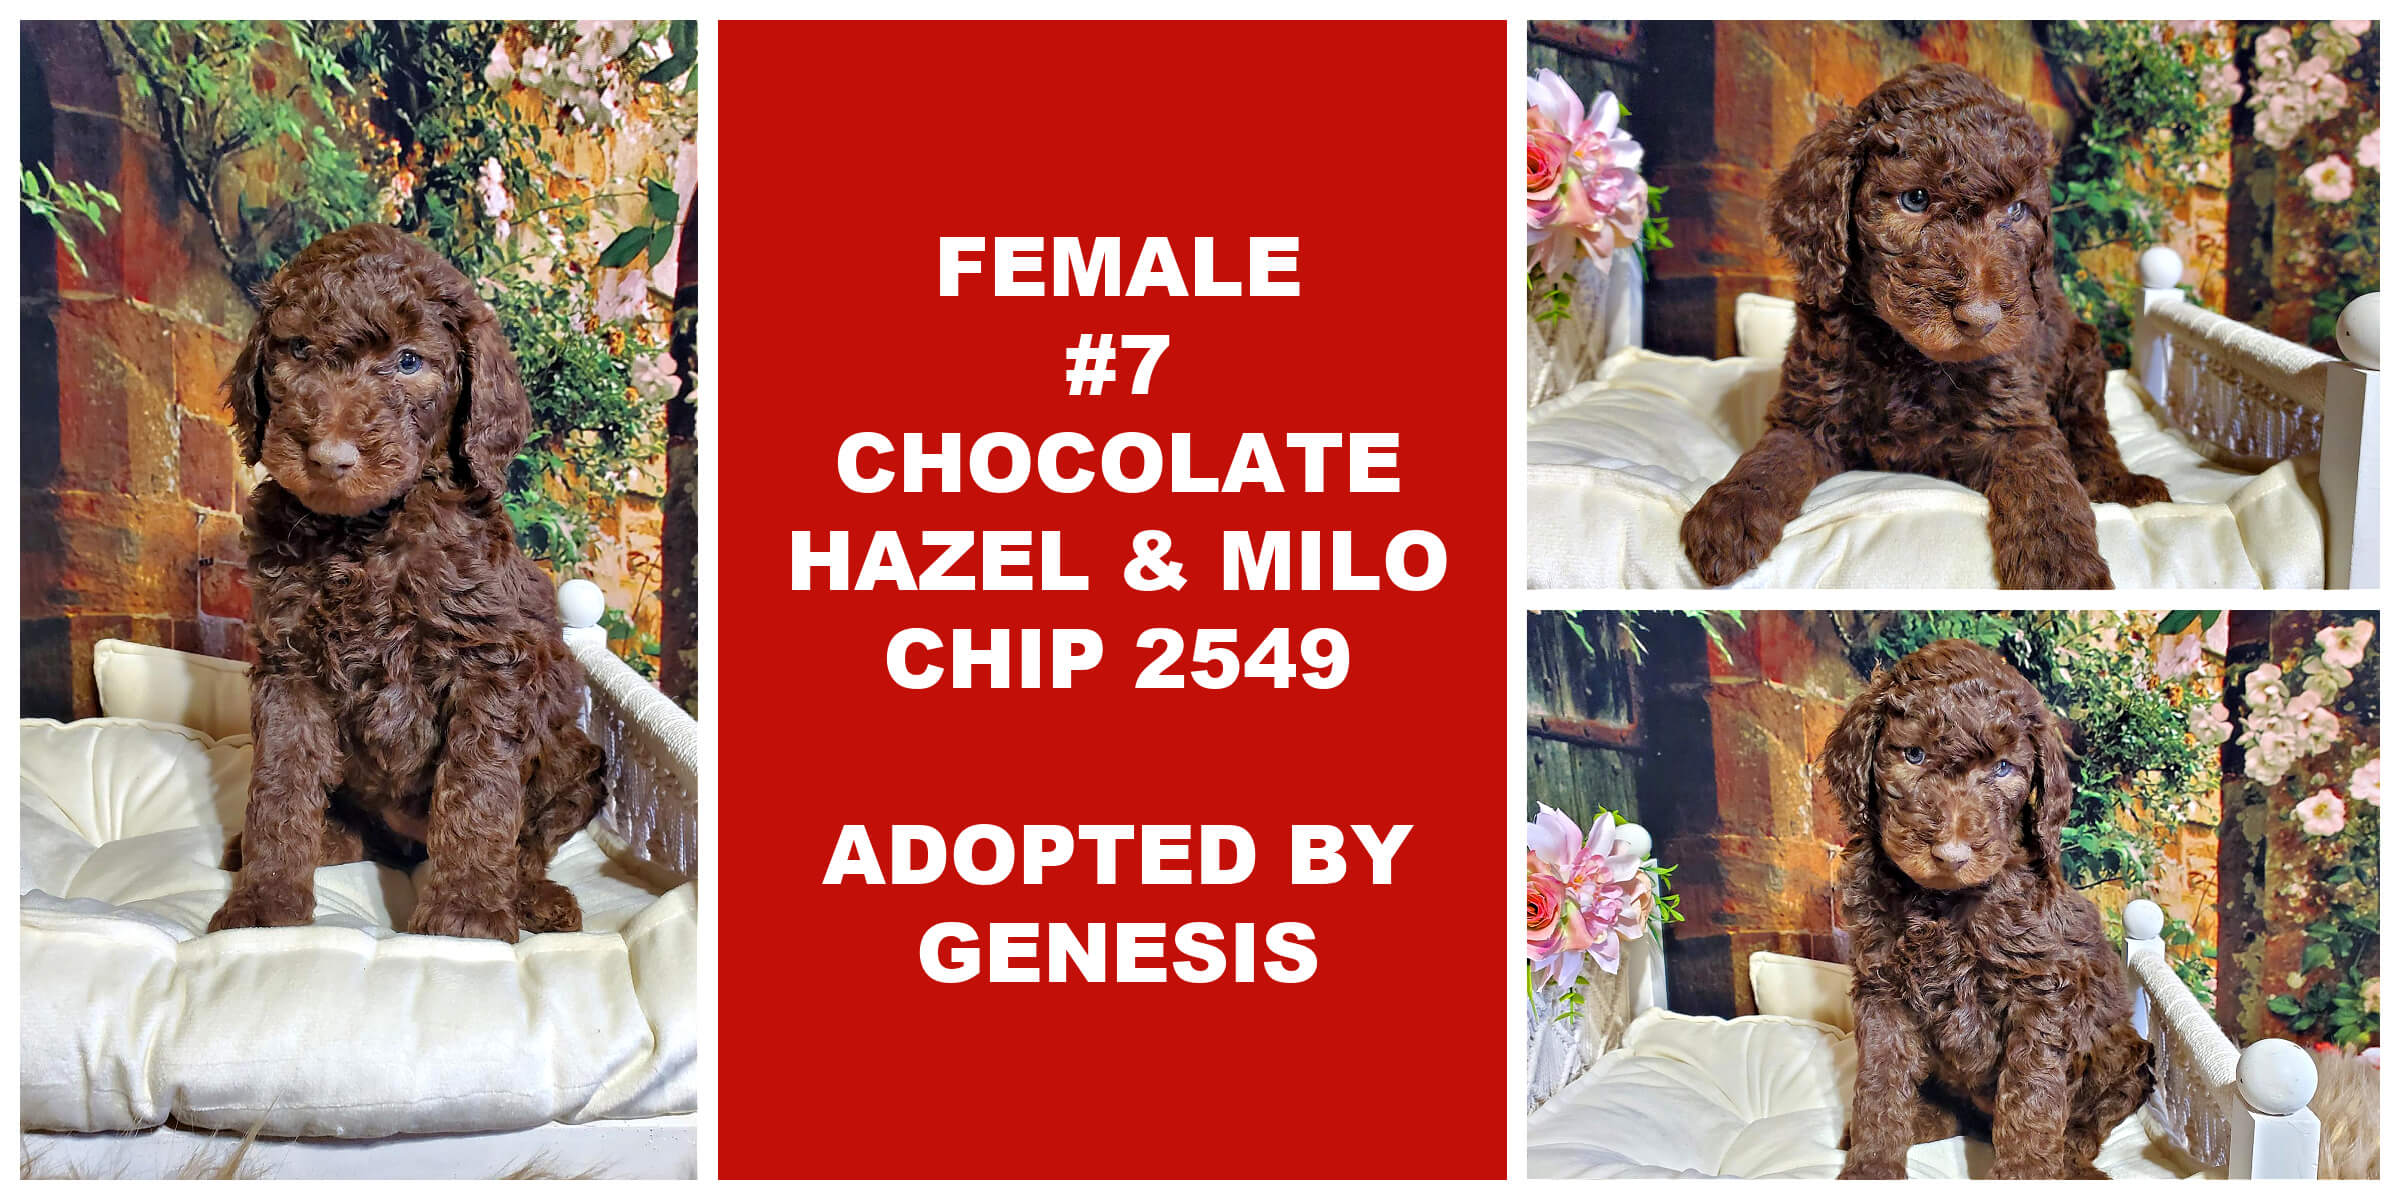 FEMALE # 7 CHOCOLATE HAZEL & MILO CHIP 2549..